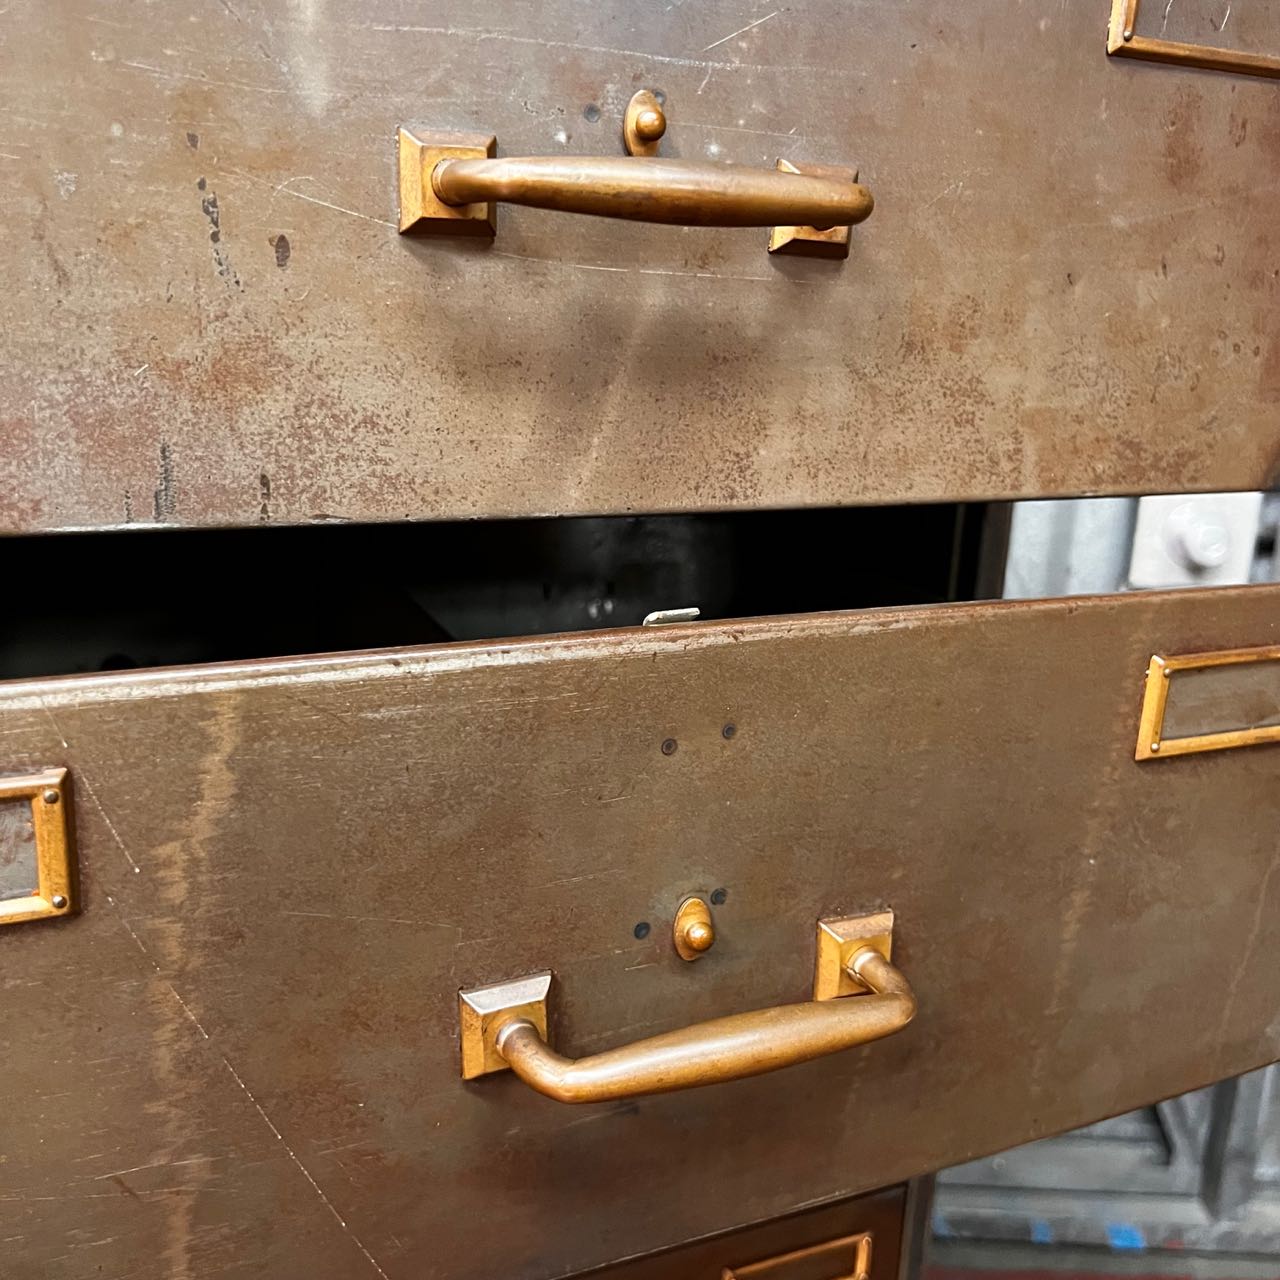 Postal Storage Cabinet